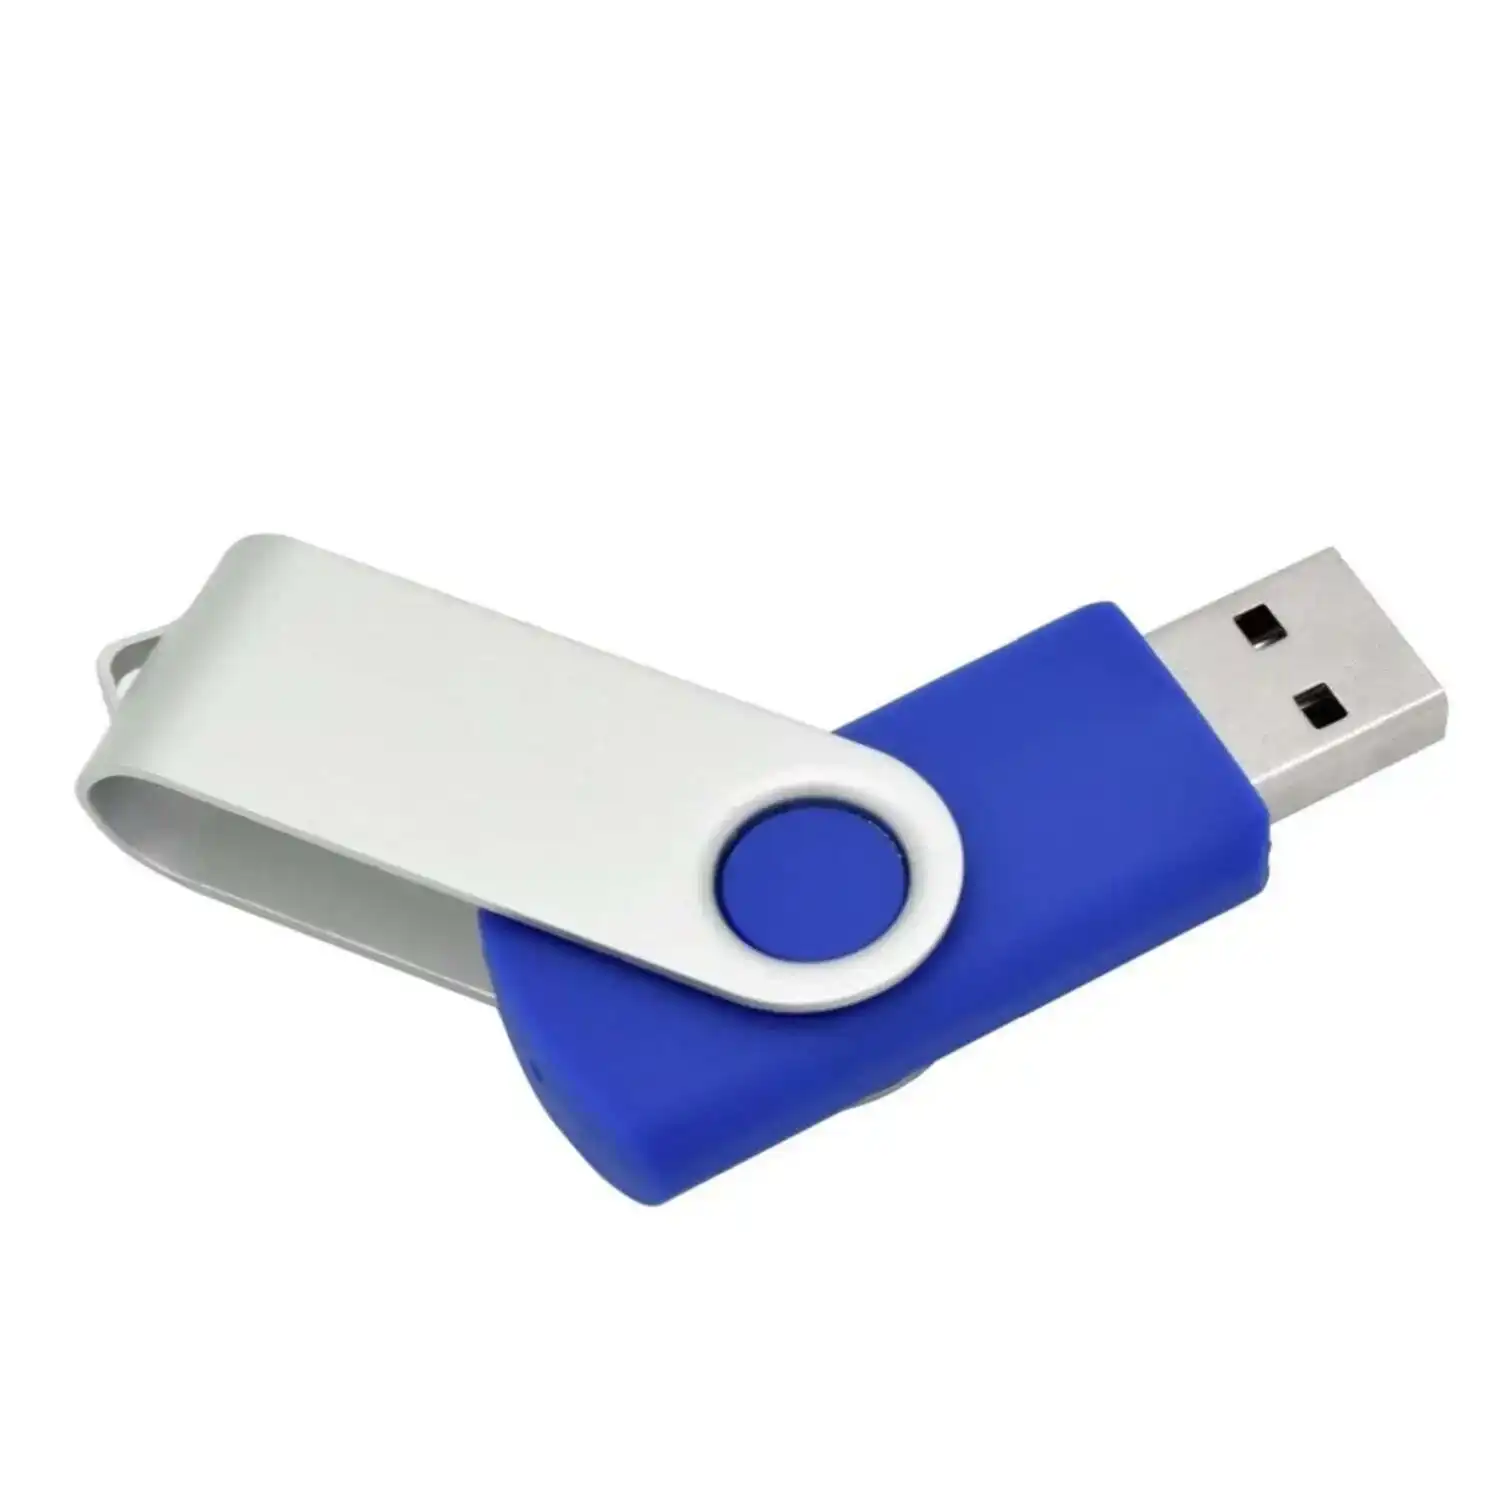 Kensington USB 2.0 Swivel Flash Drive 16GB Memory Stick File/Data Storage Blue